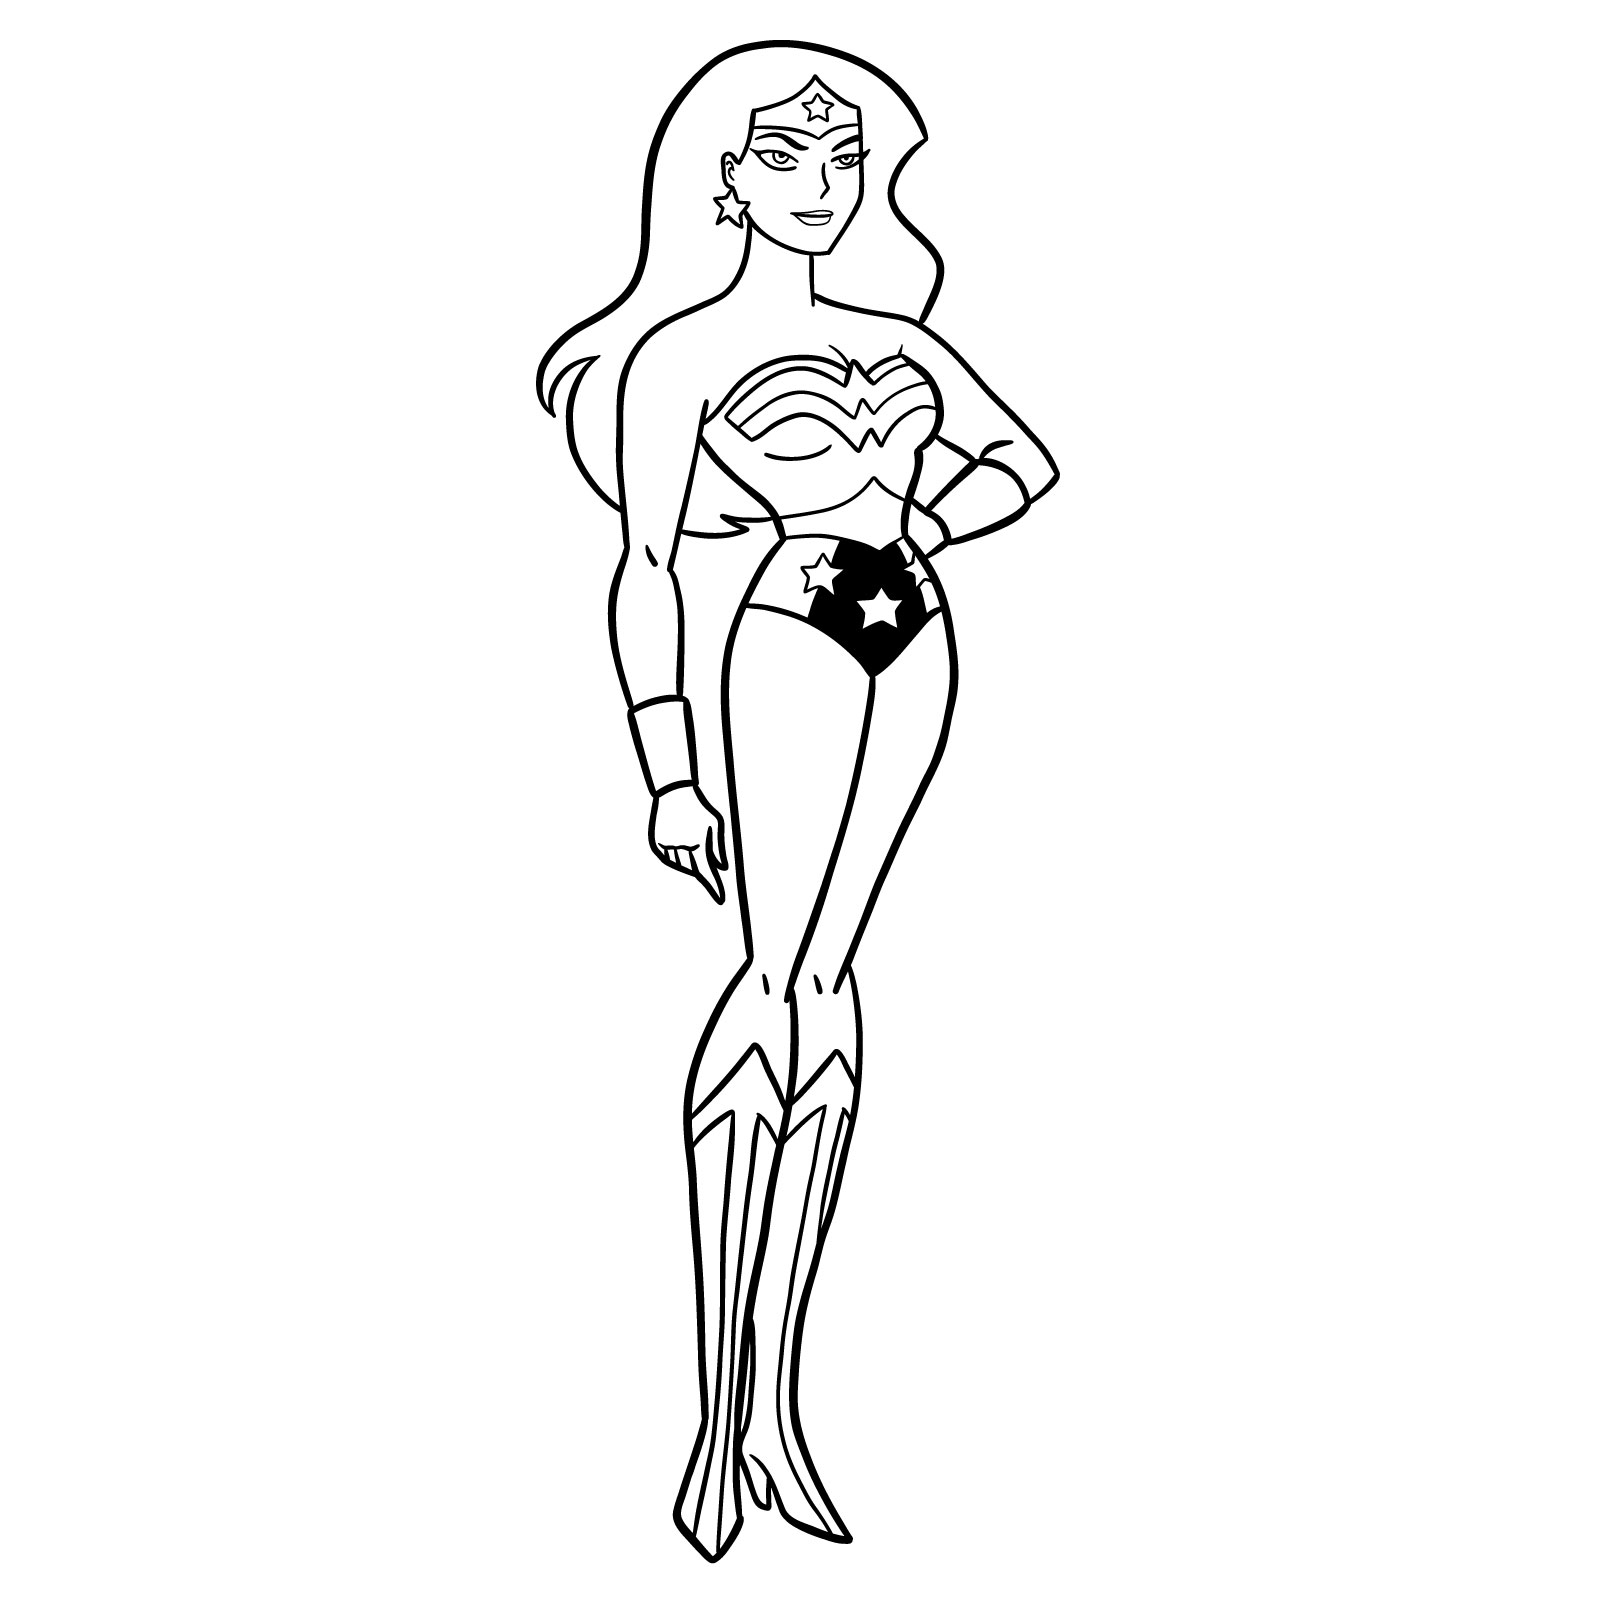 How to draw Wonder Woman cartoon style - step 32